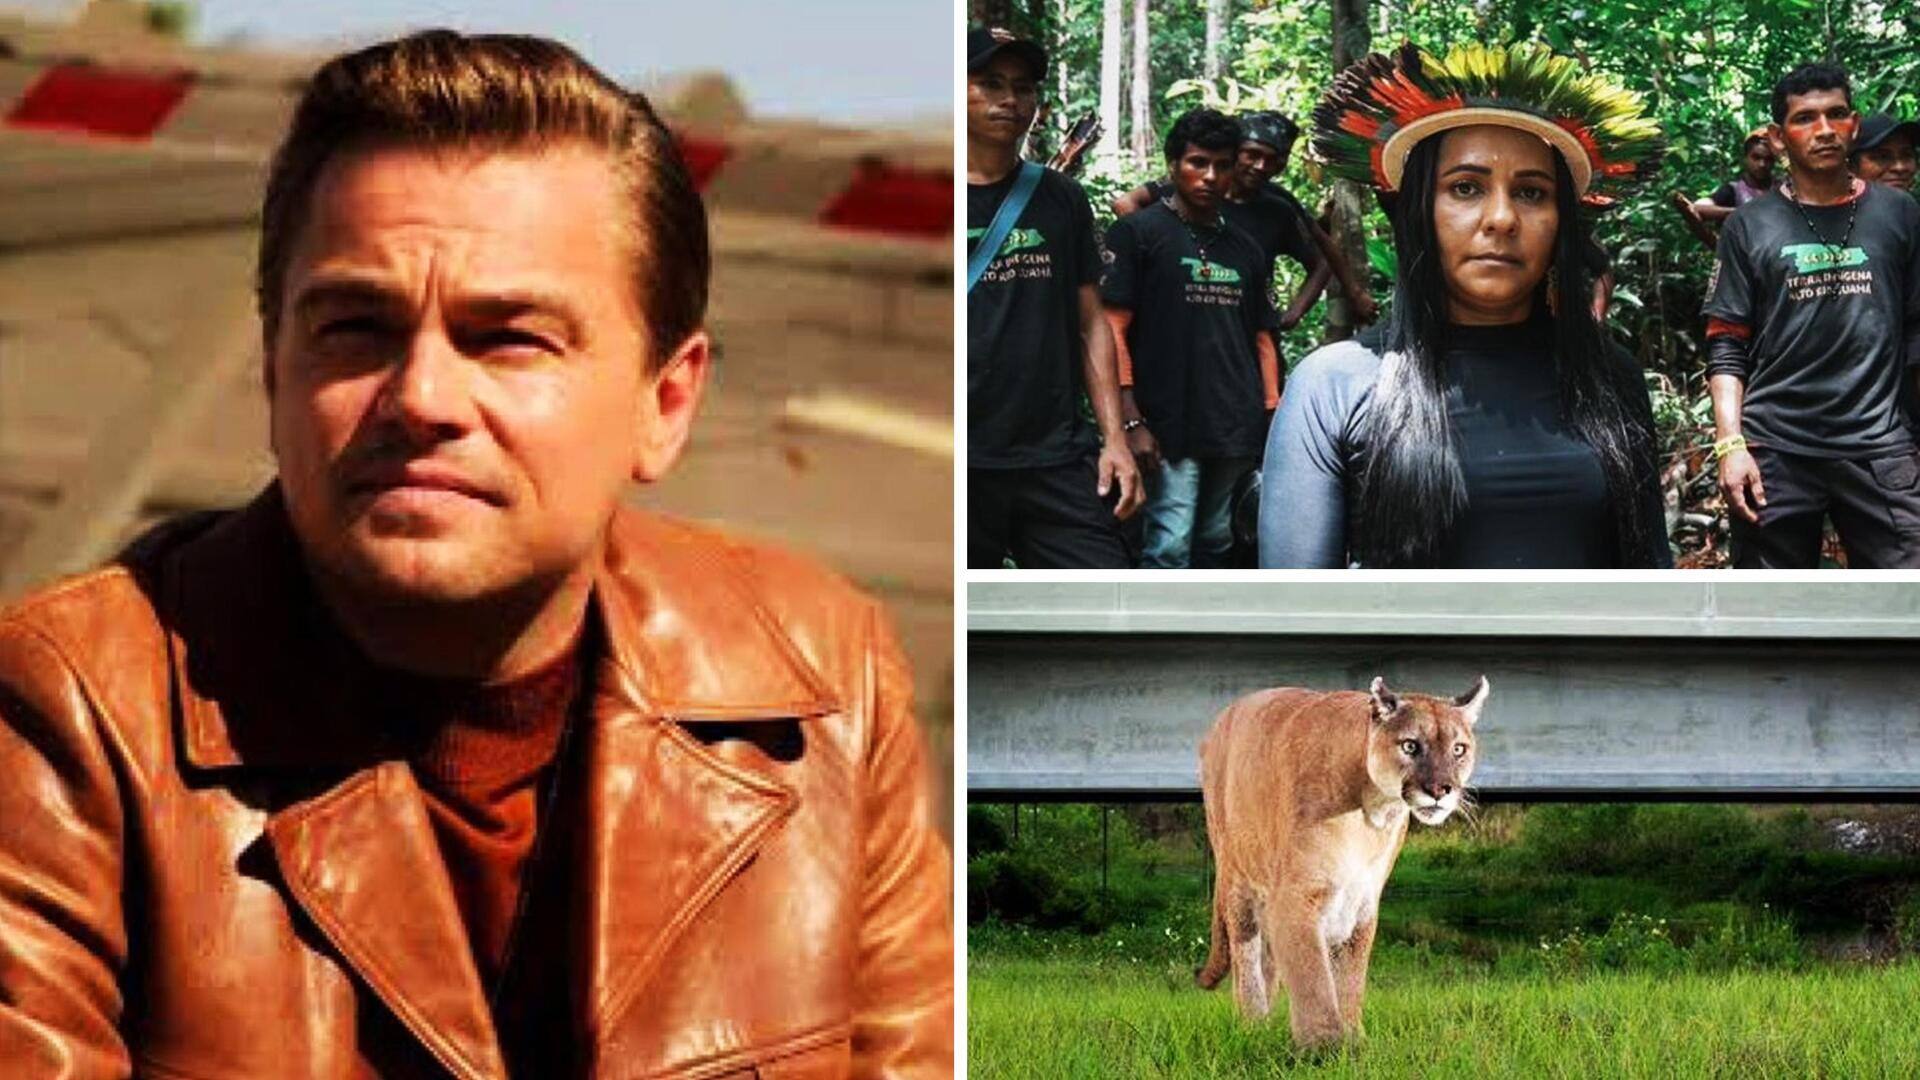 Leonardo DiCaprio's 2 environmental films set for their Indian premiere